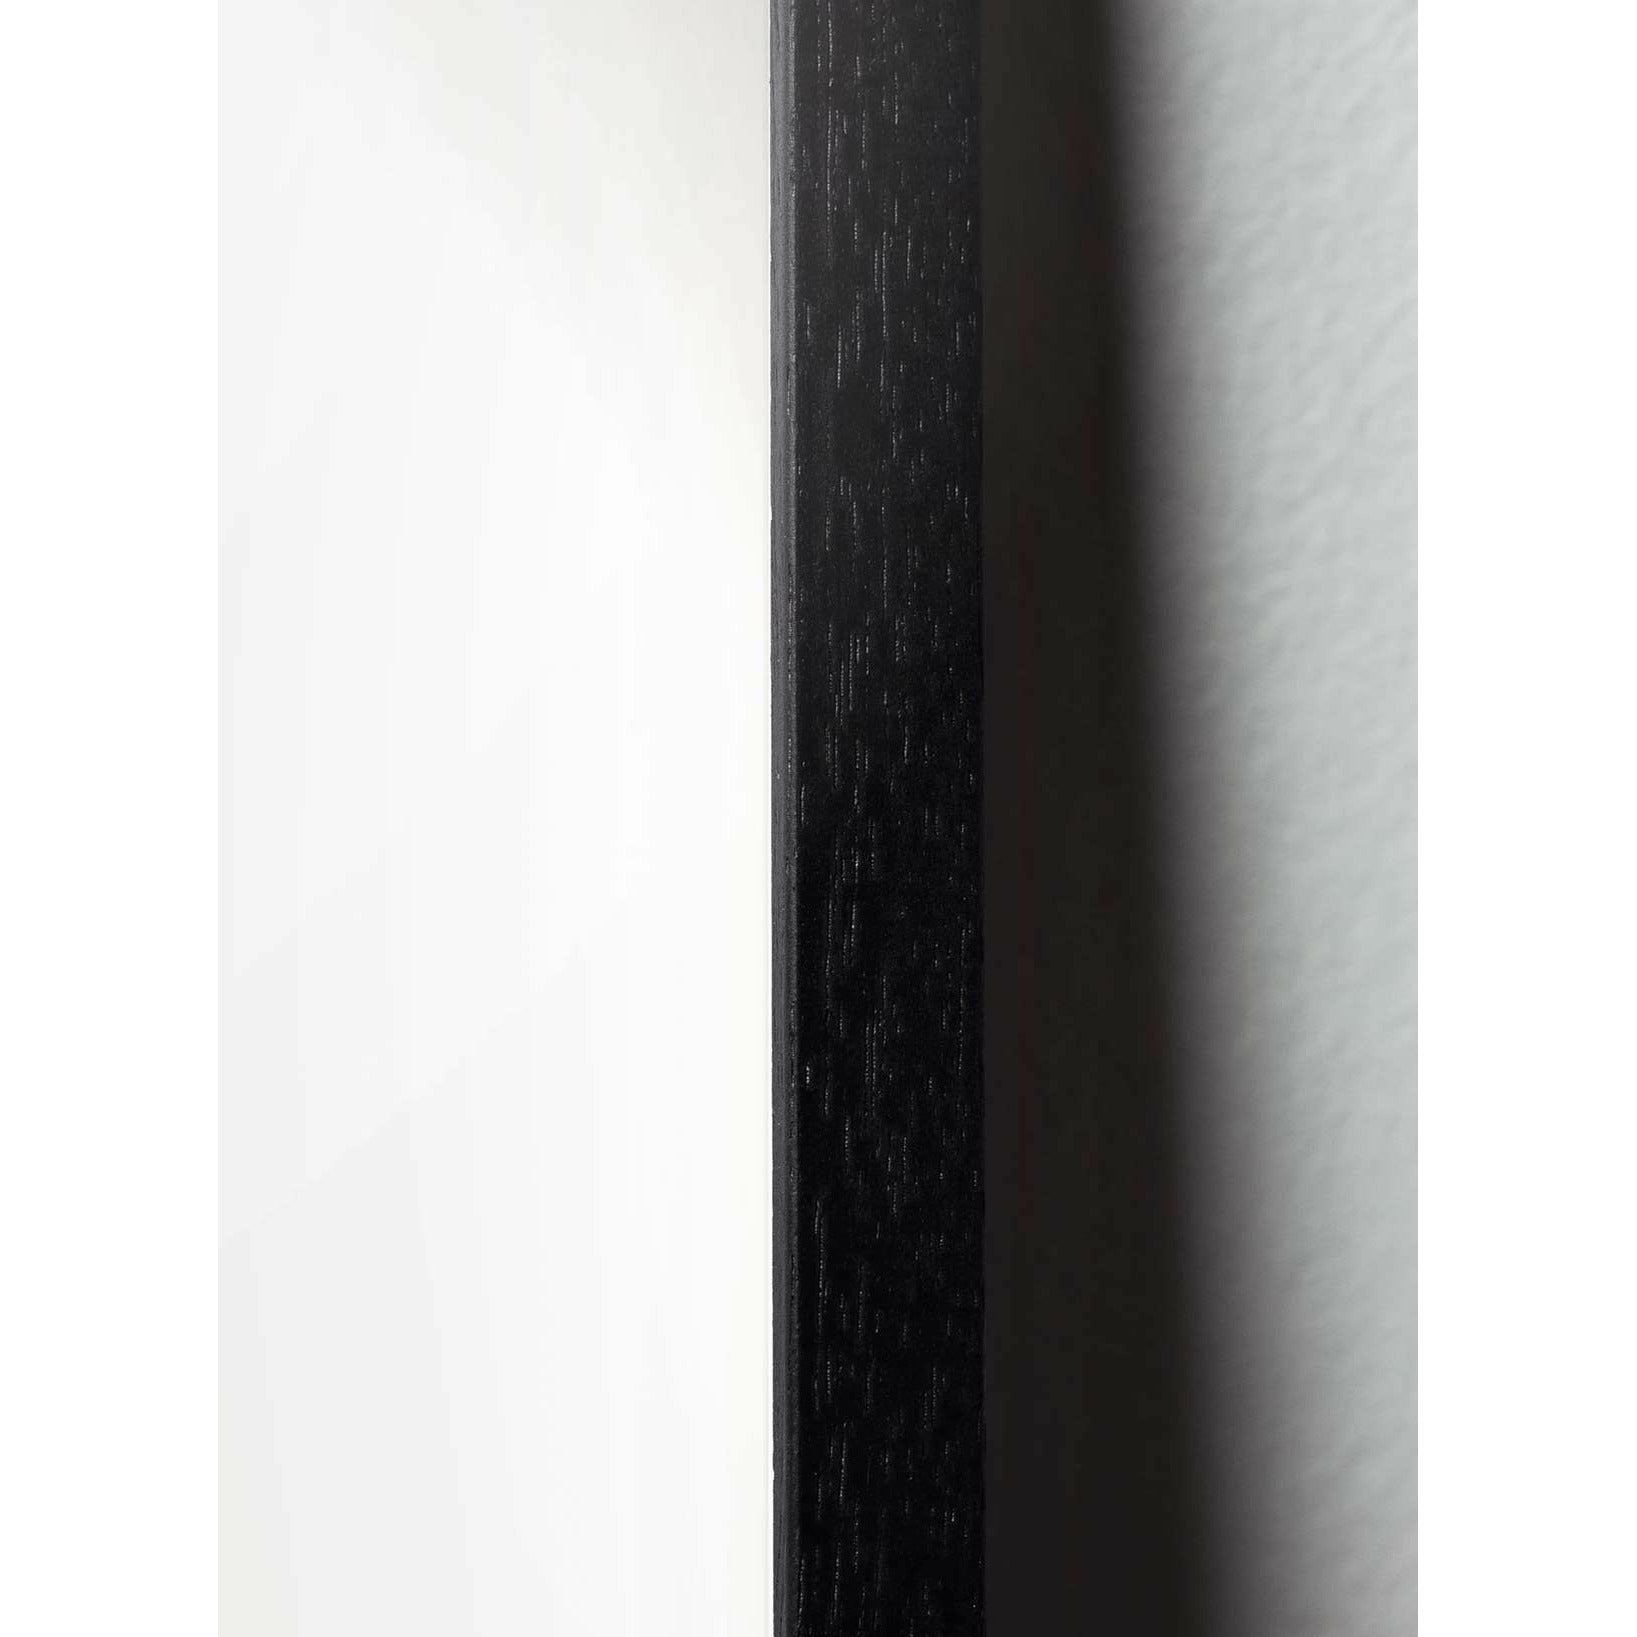 Brainchild Äggfiguraffisch, ram i svart -målat trä 70x100 cm, brunt